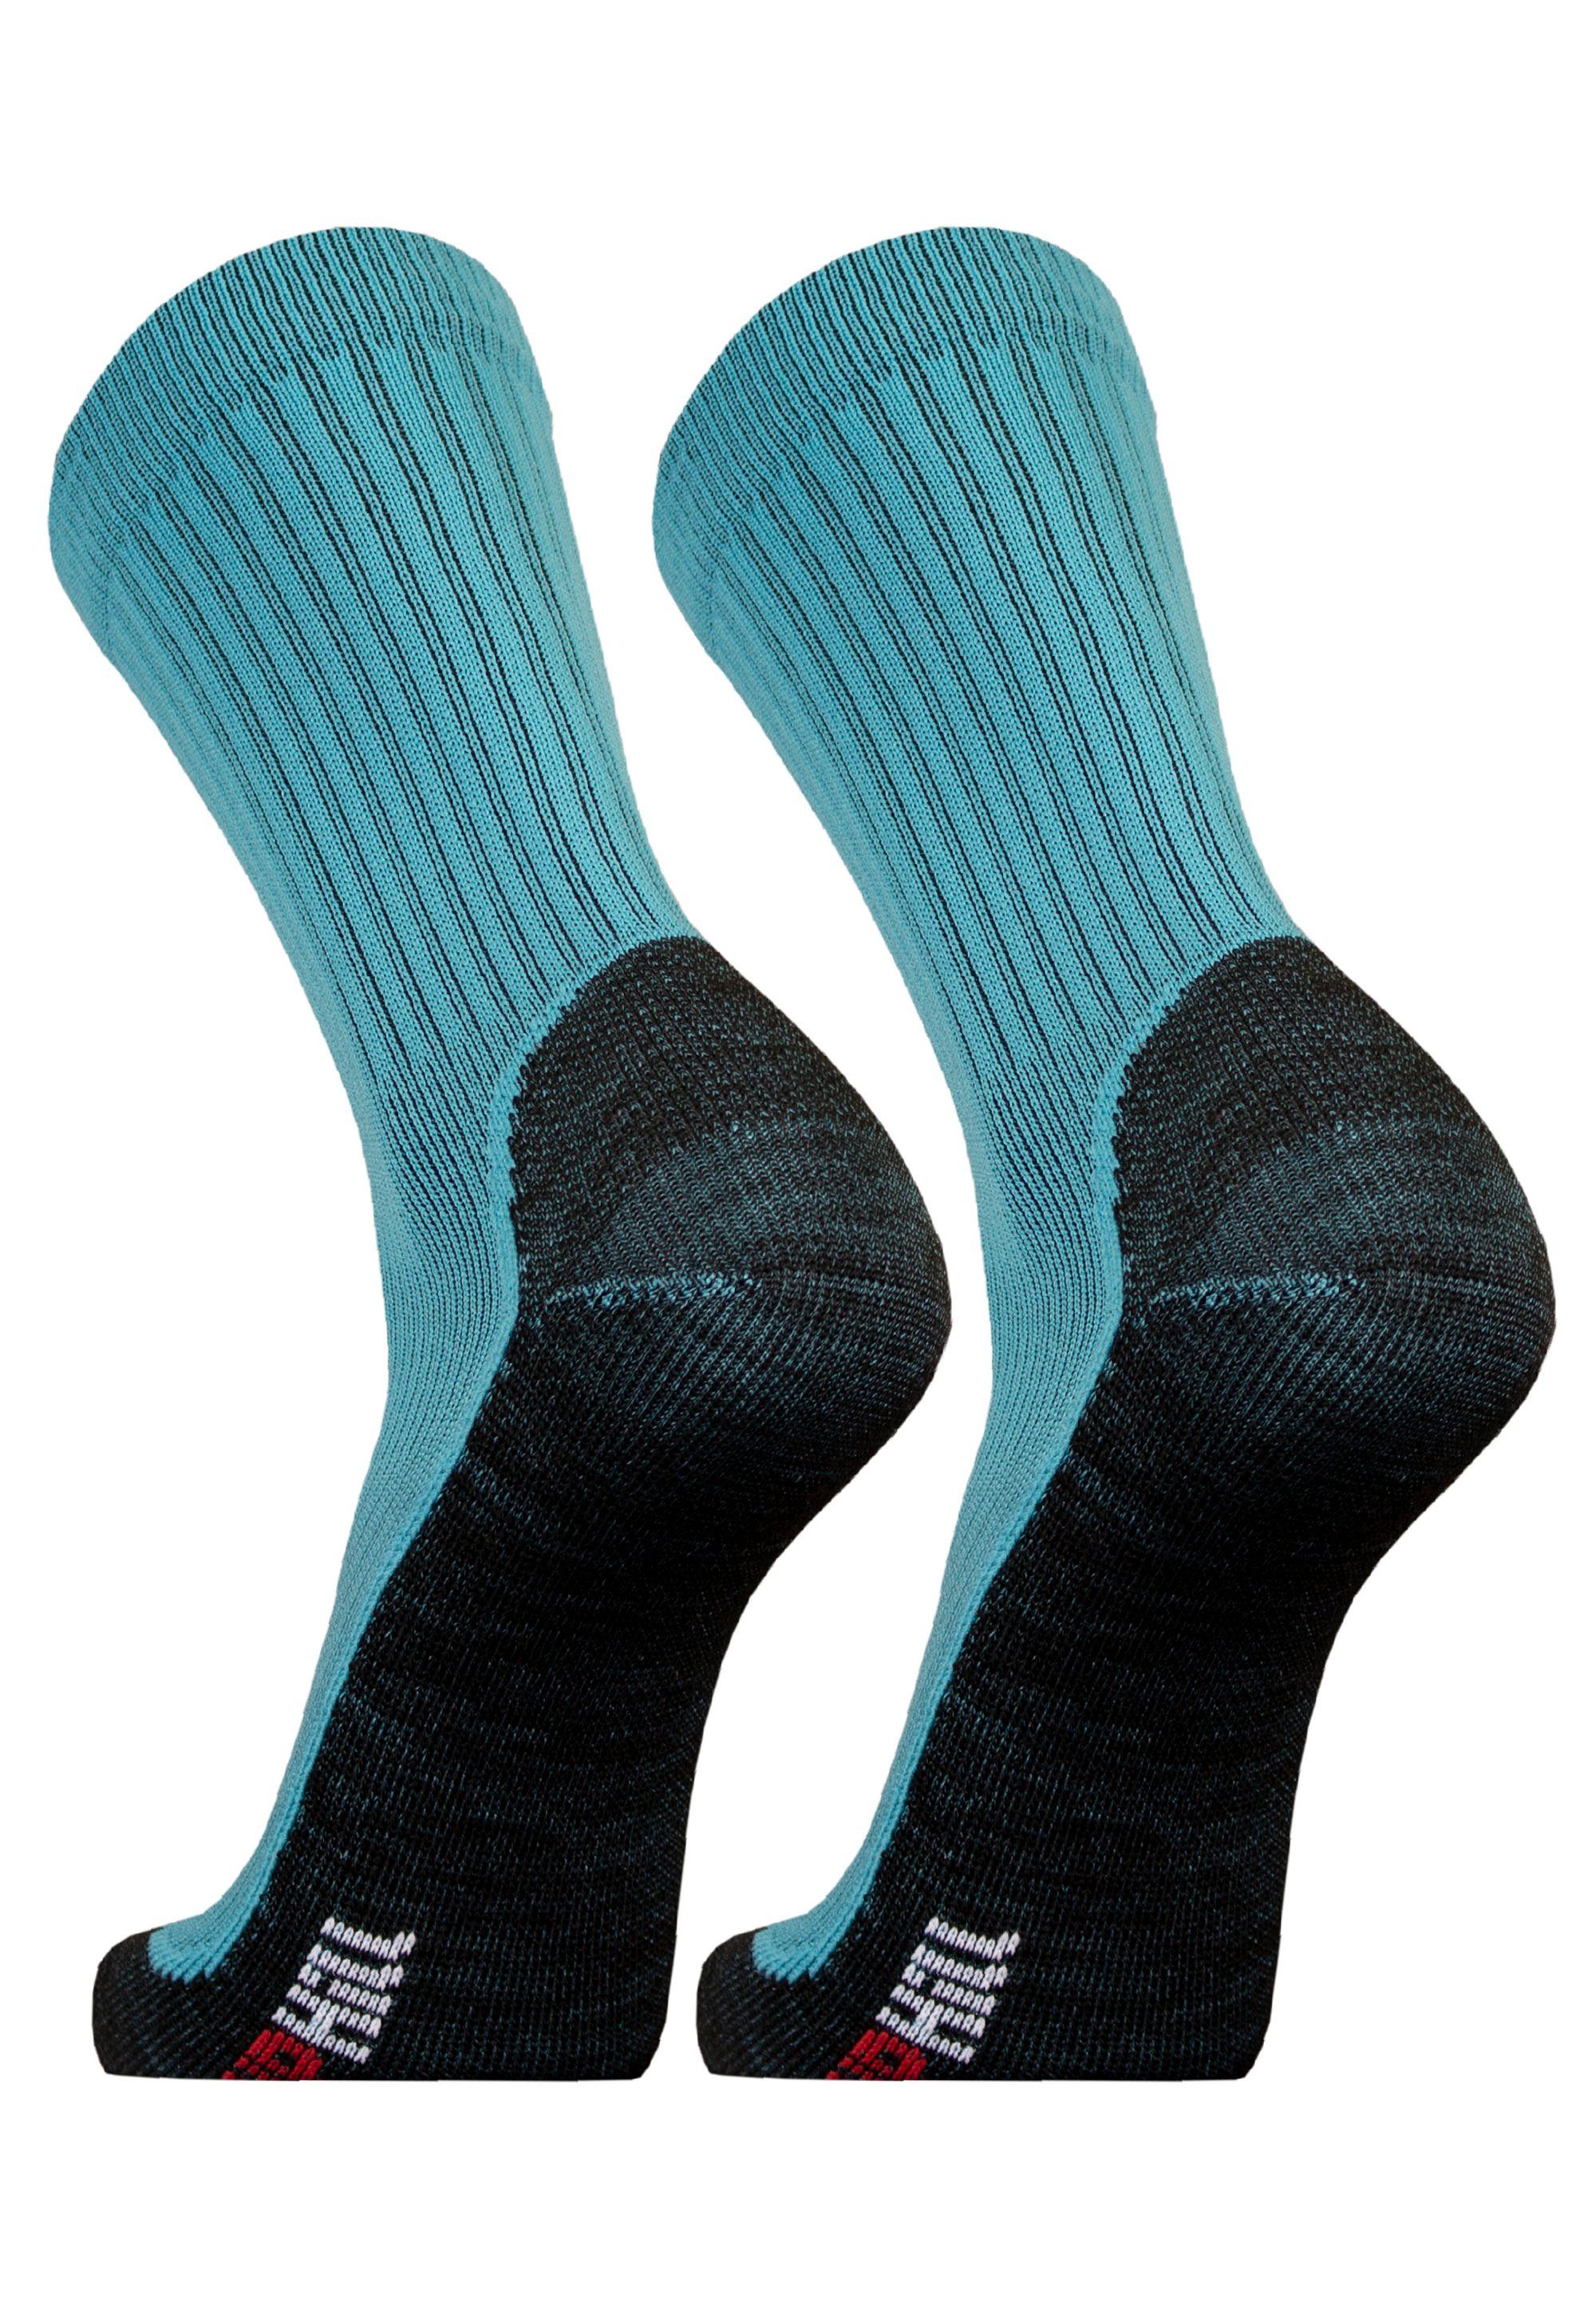 UphillSport Socken WINTER XC 2er Pack (2-Paar) mit atmungsaktiver Funktion | Wandersocken